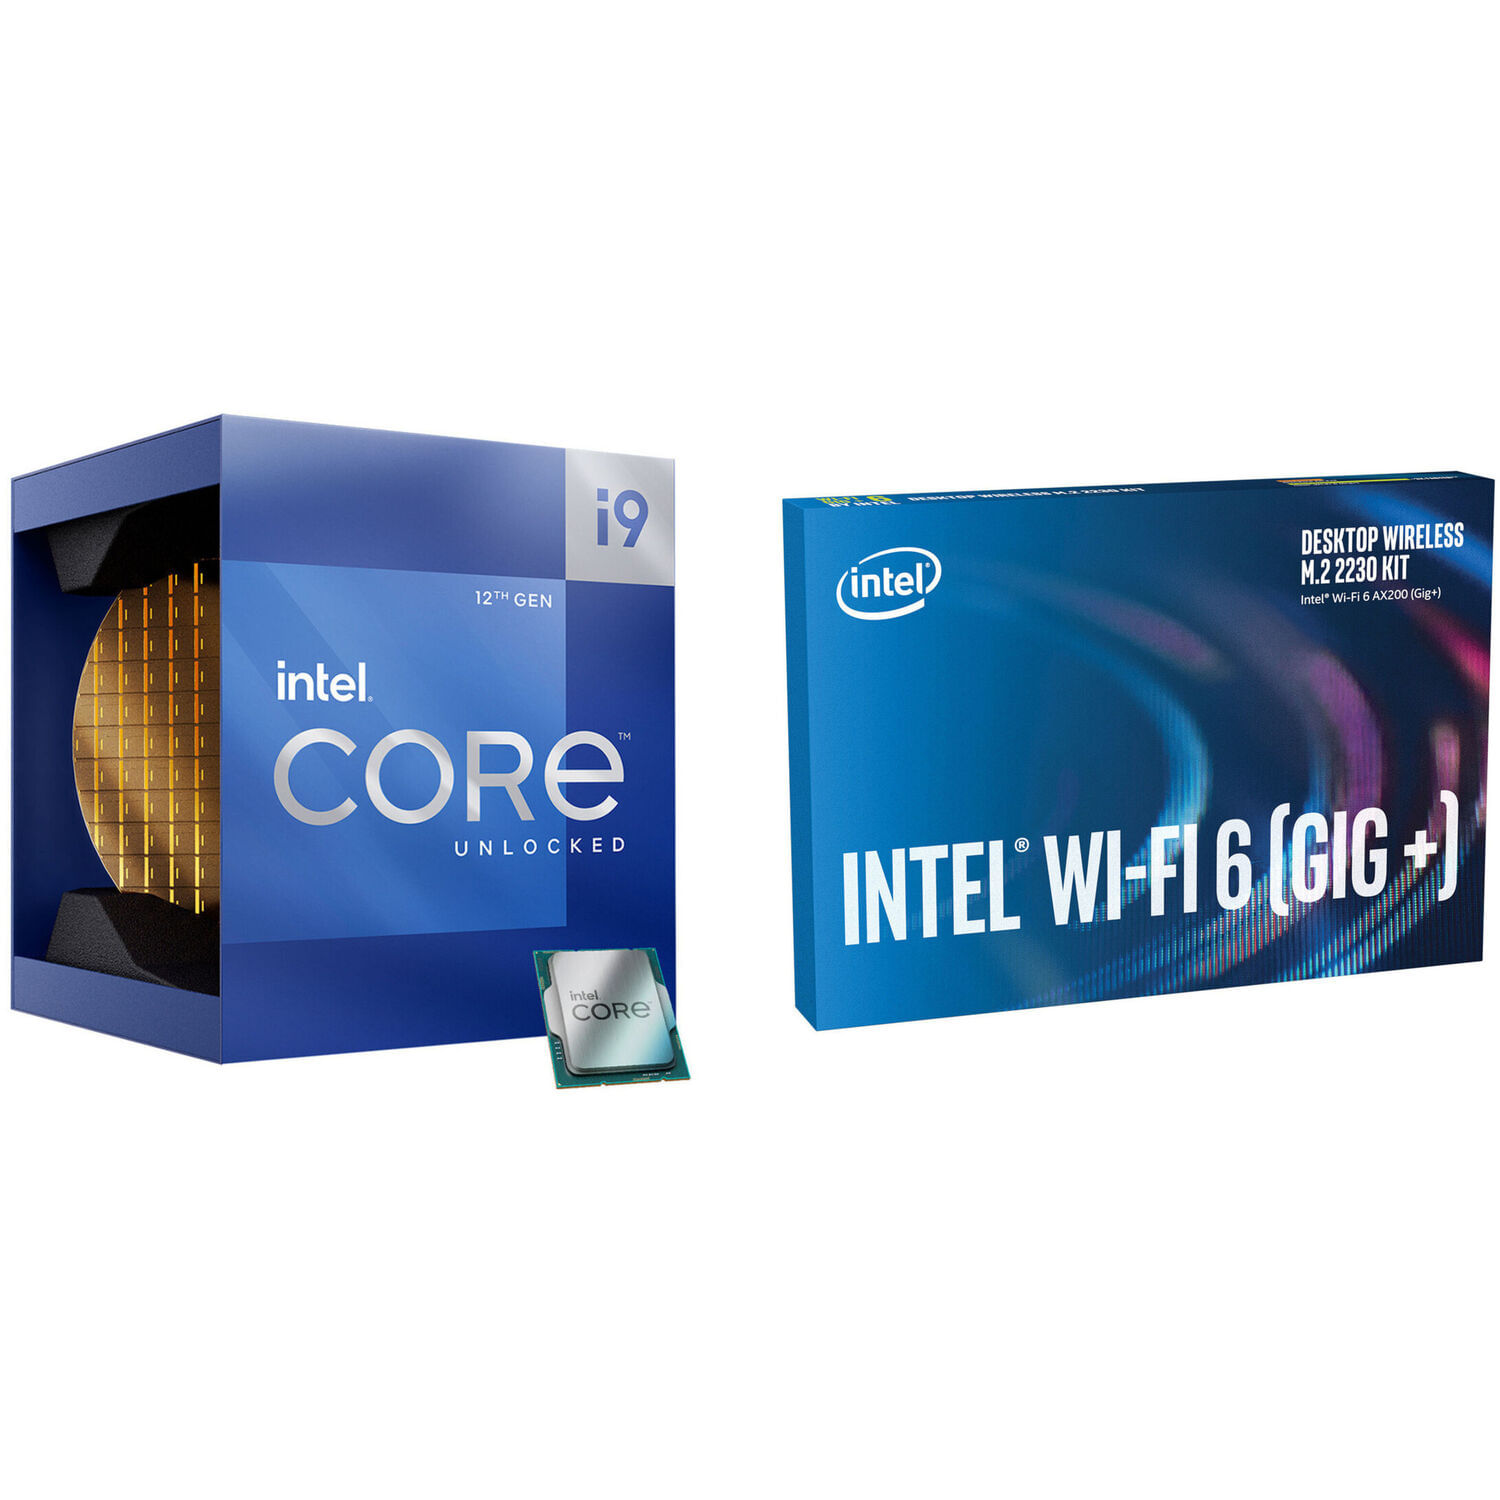 Procesador Intel Core I9 12900K Y Kit de Wi Fi 6 Intel Ax200 Gig+